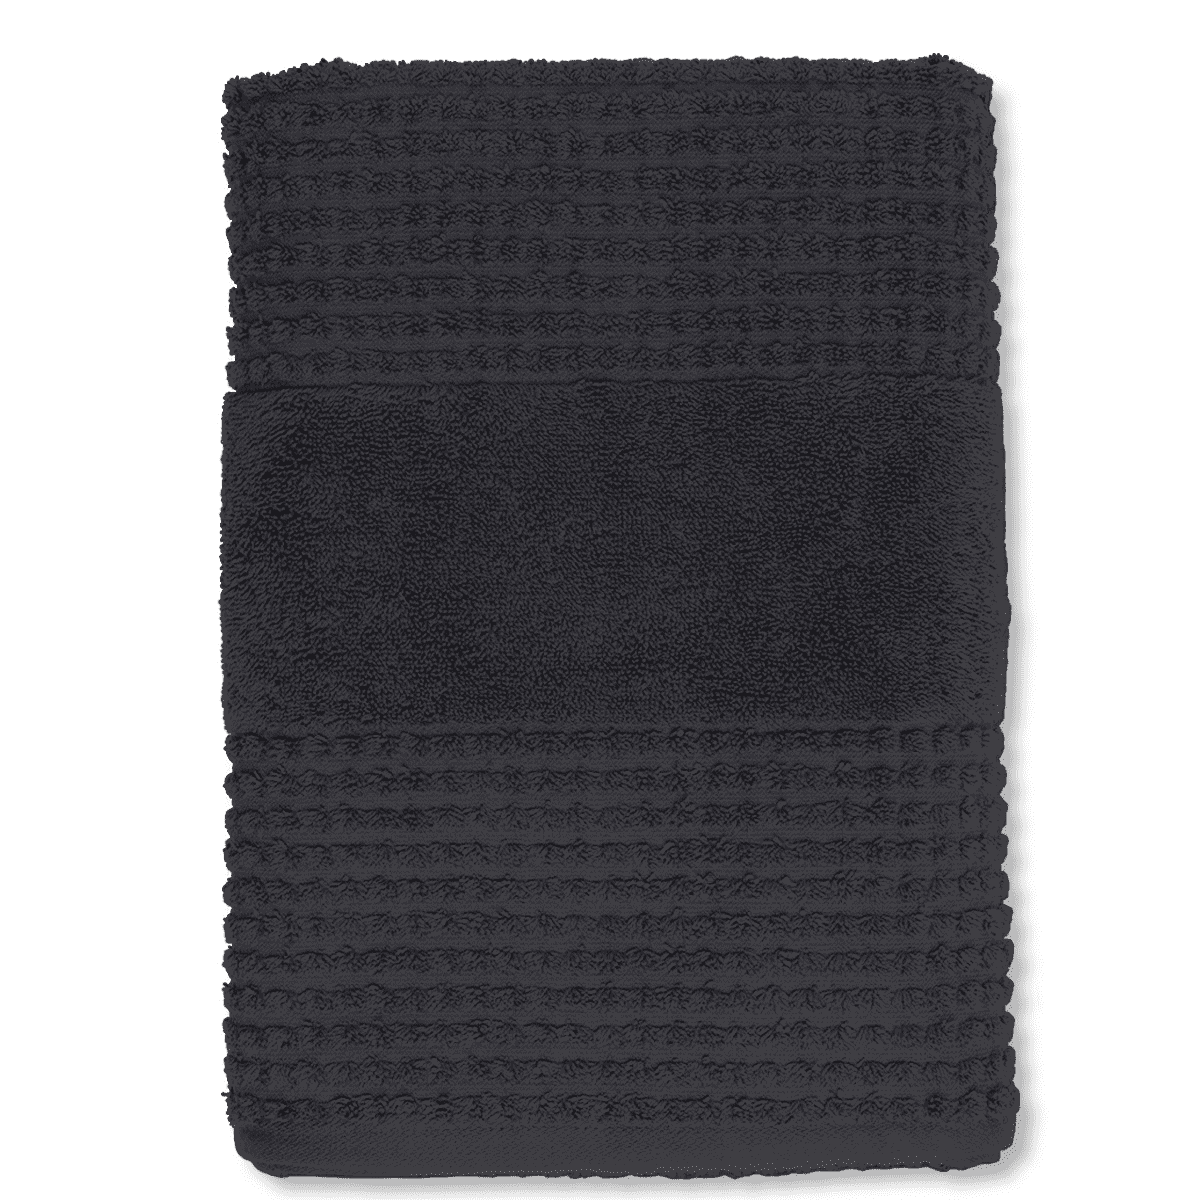 Towel 70x140 cm